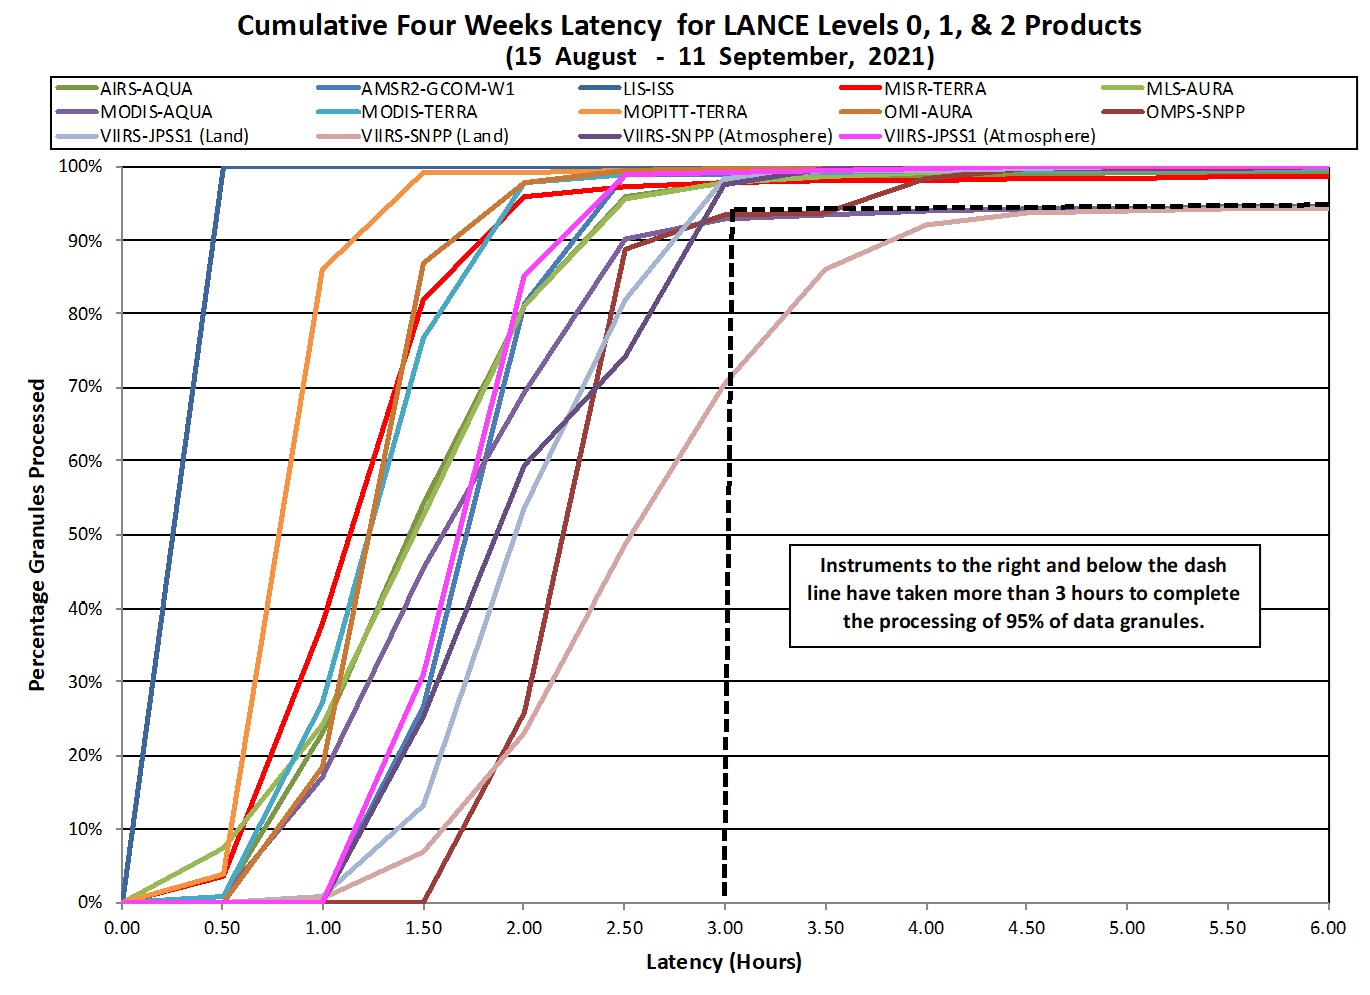 Chart of LANCE cumulative 4 week latency